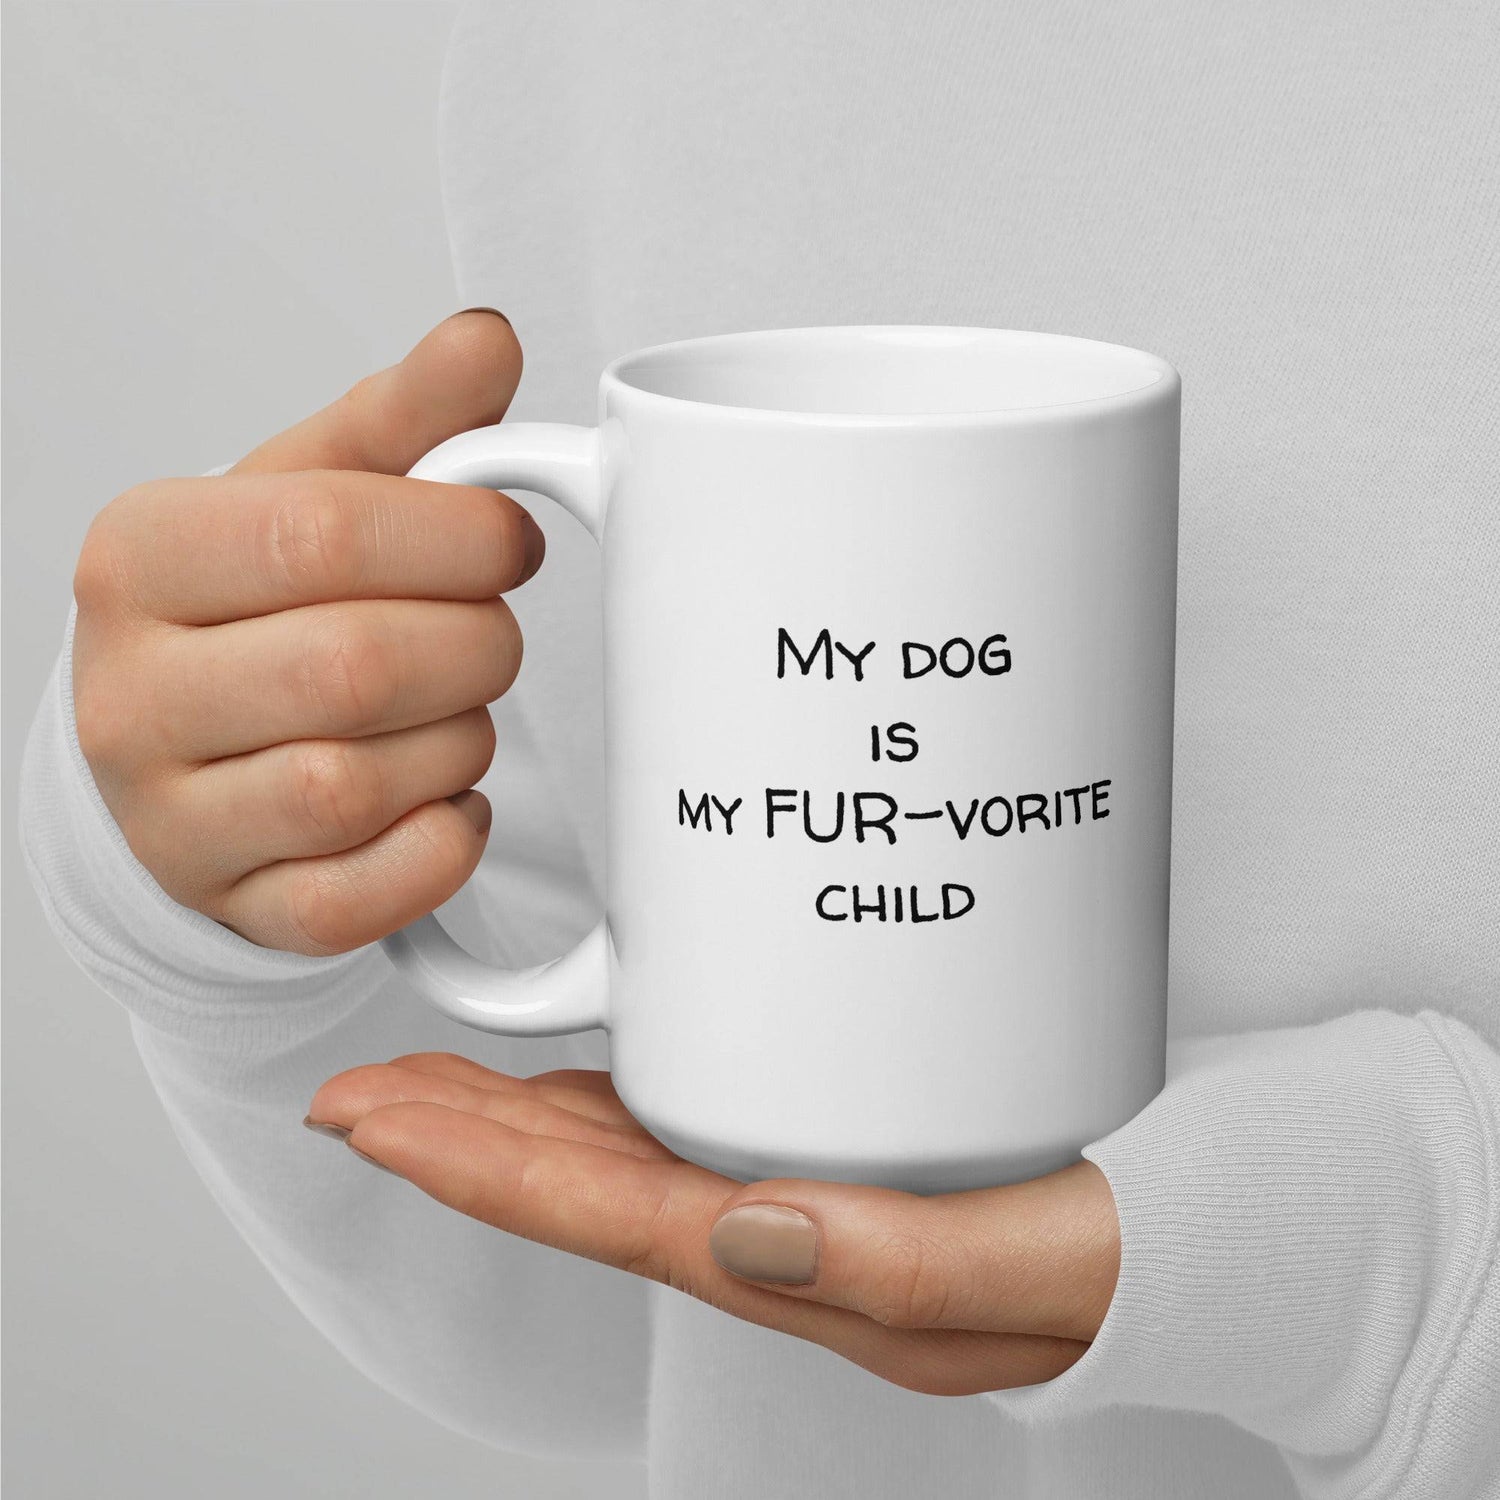 My Dog is My FUR-vorite Child Printed Mug - Dog Lovers Coffee Mug